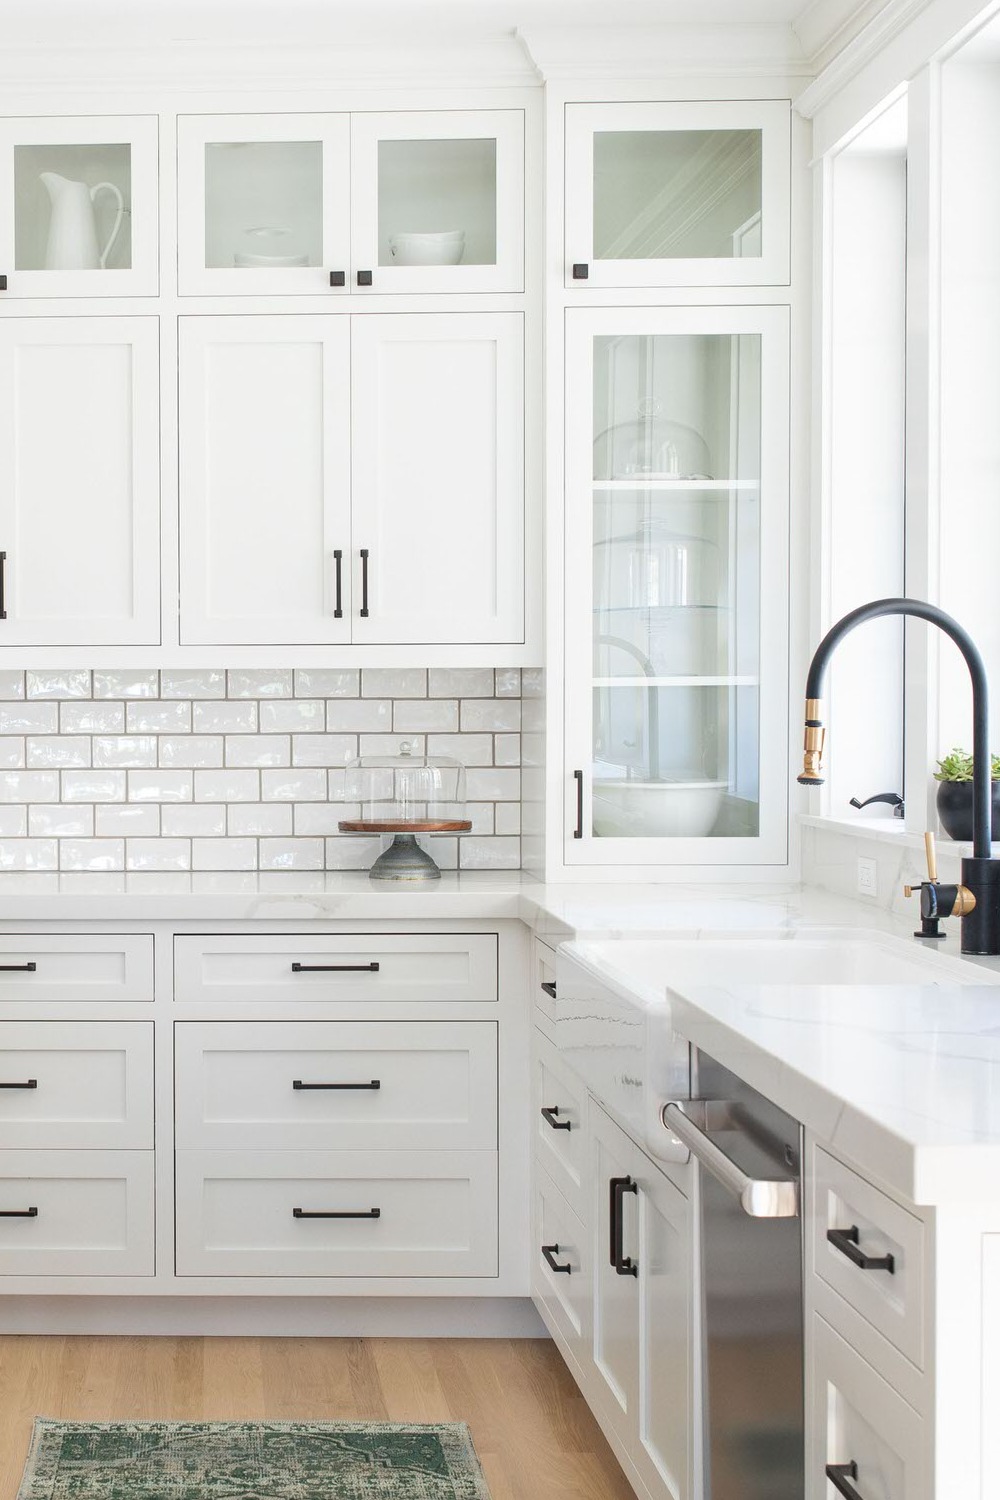 Kitchen Backsplash Ideas For White Subway Tiles Black Hardware Farmhouse Sink Tile Light Hardwood